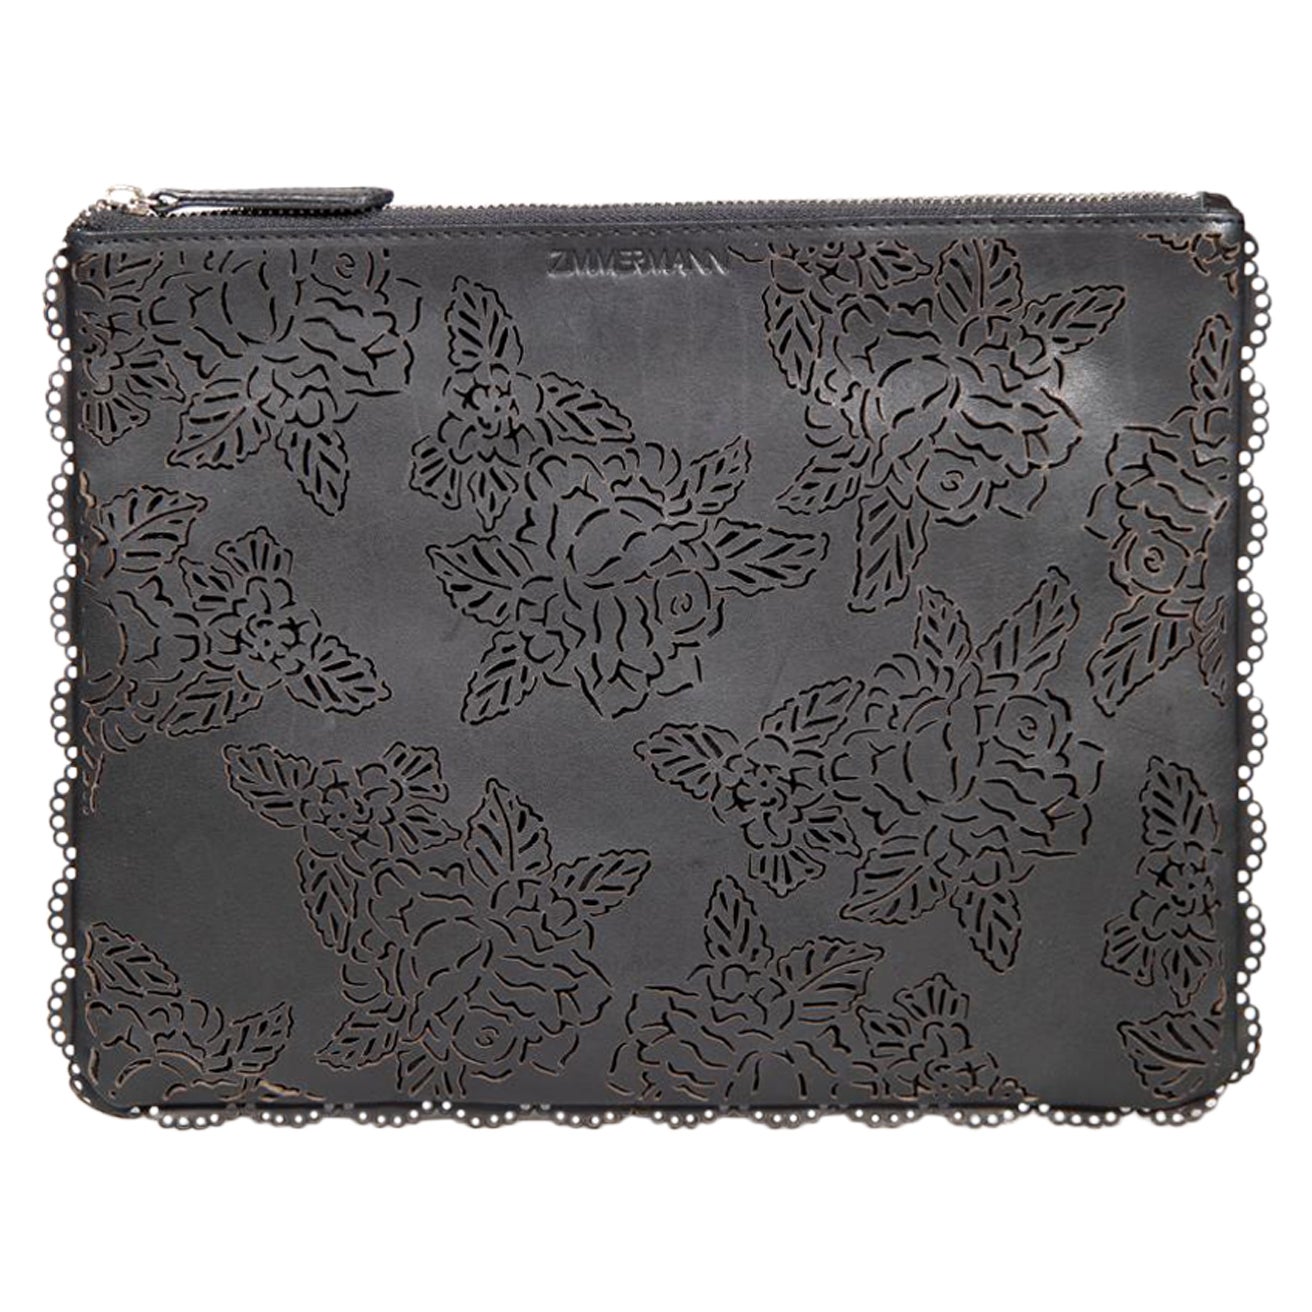 Zimmermann Black Leather Floral Laser Cut Clutch For Sale